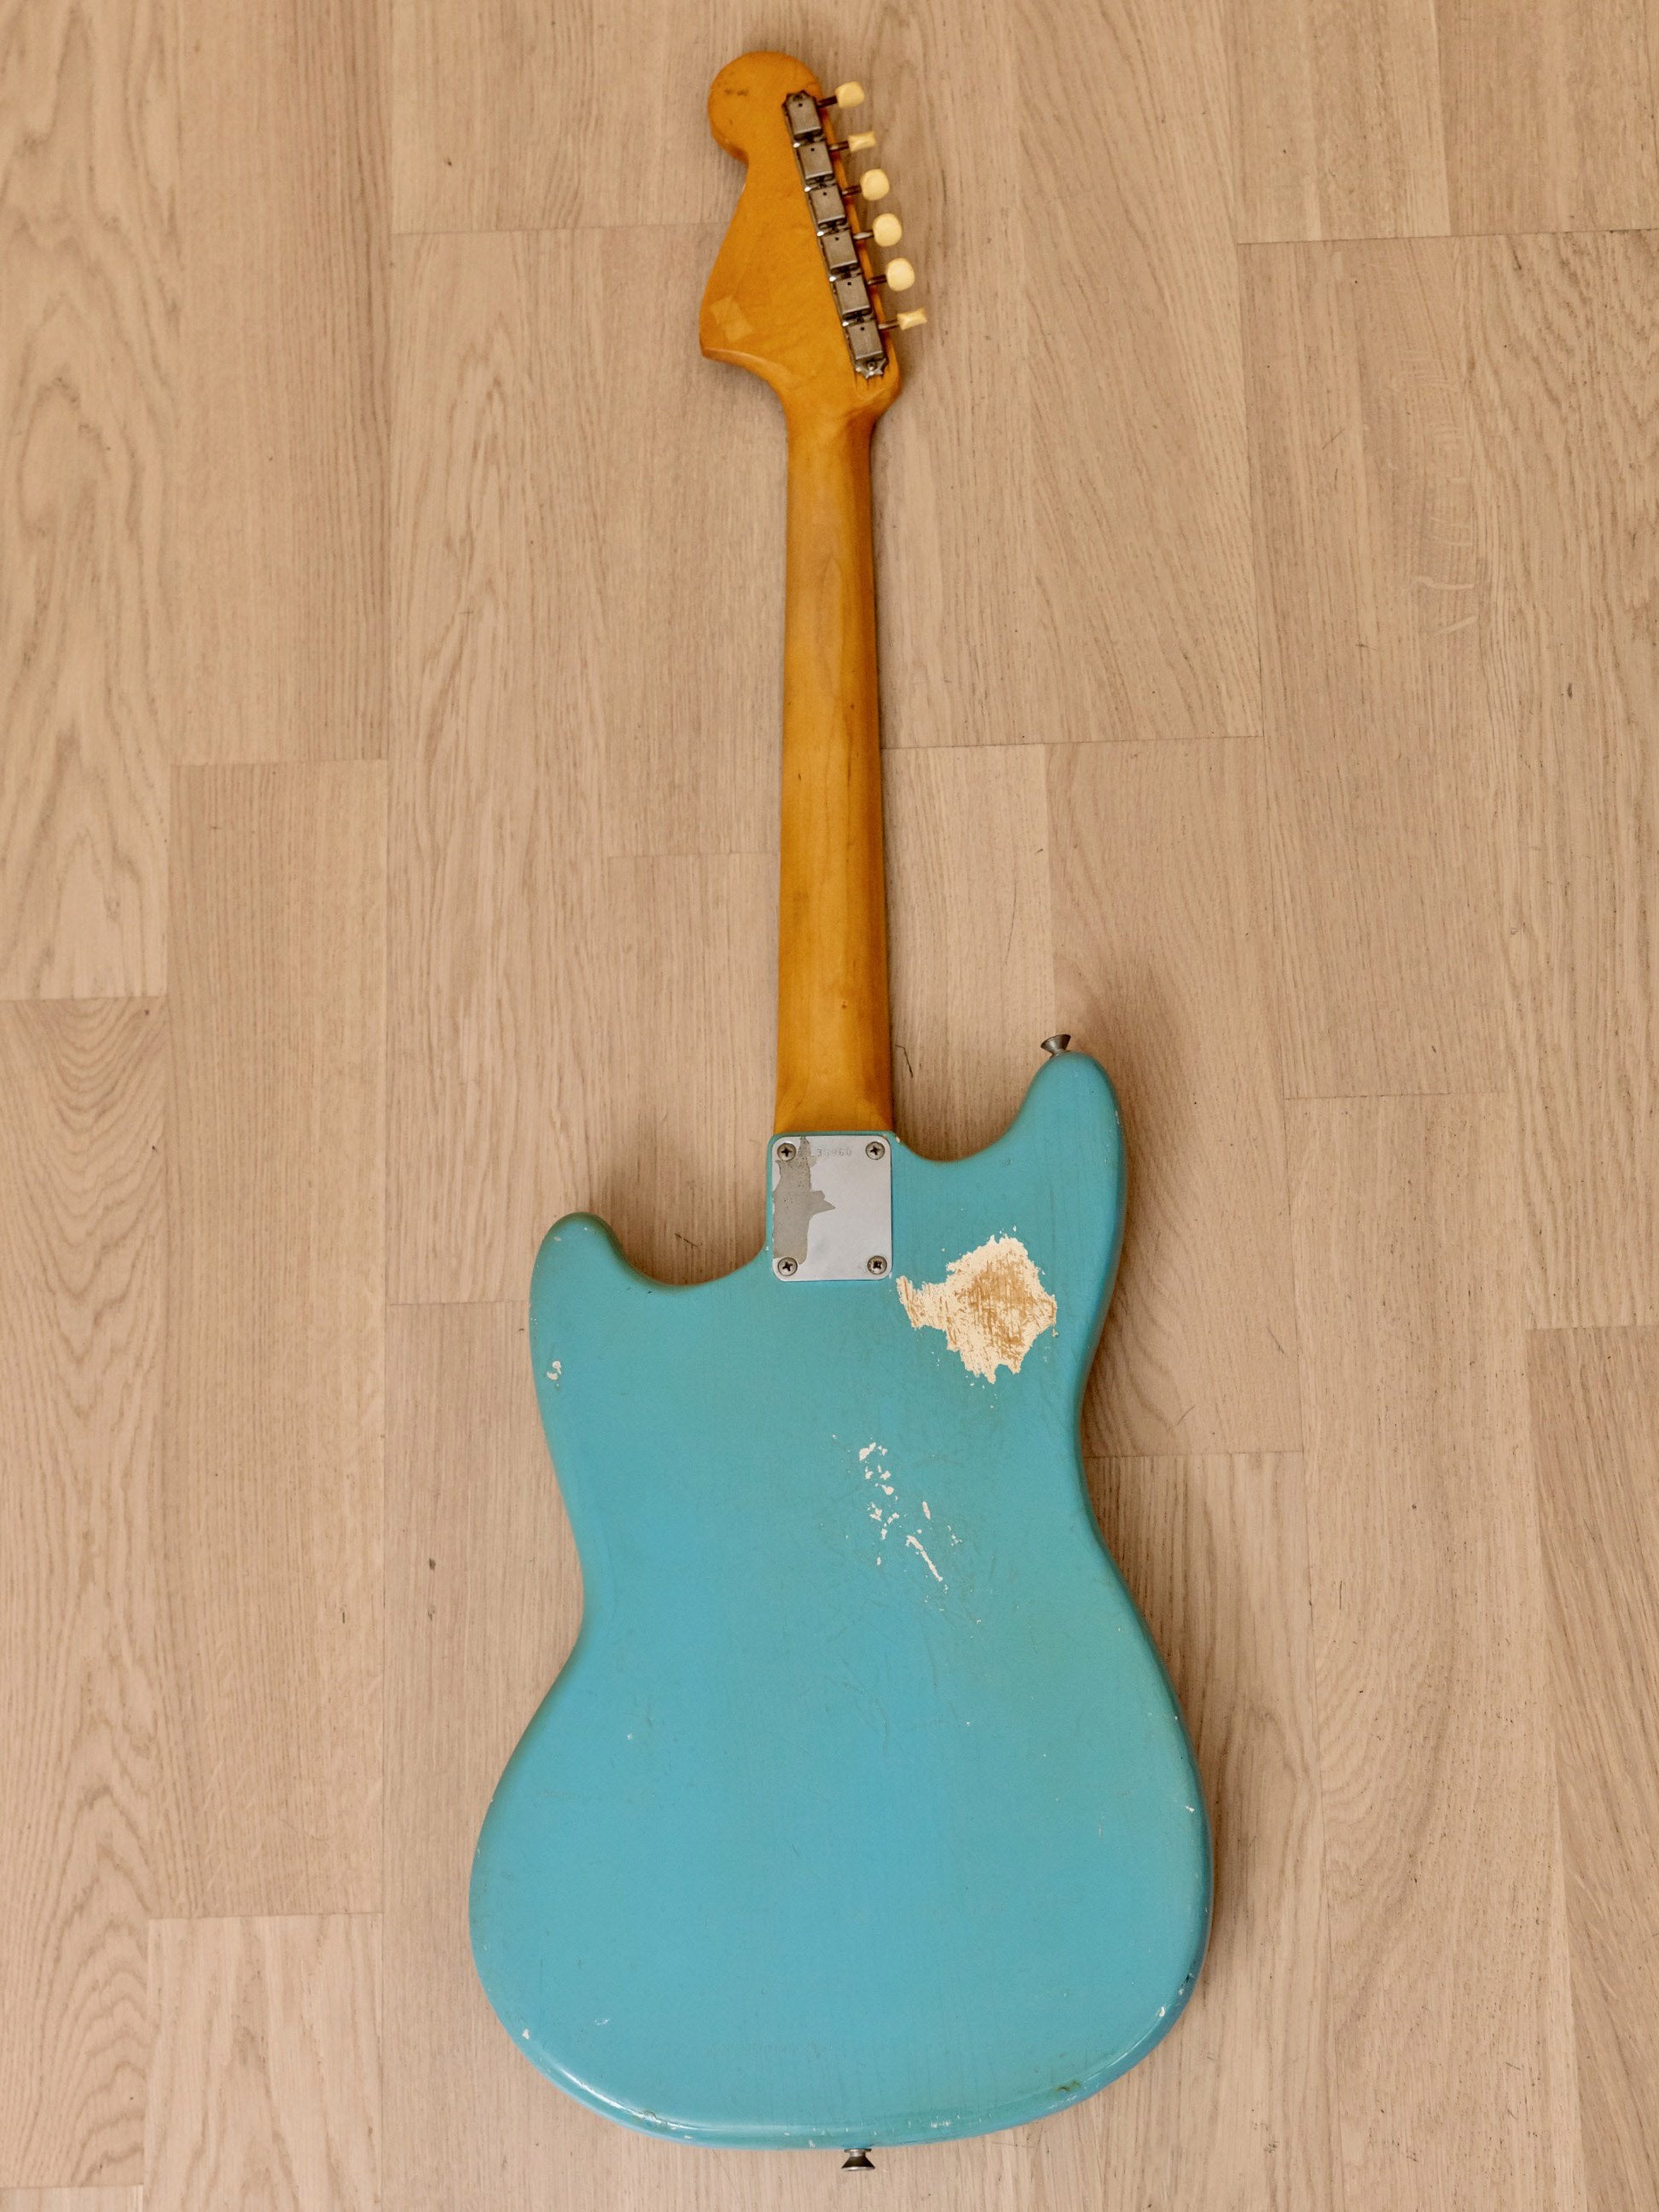 1964 Fender Mustang Vintage Pre-CBS Offset Guitar Daphne Blue, 100% Original w/ Case